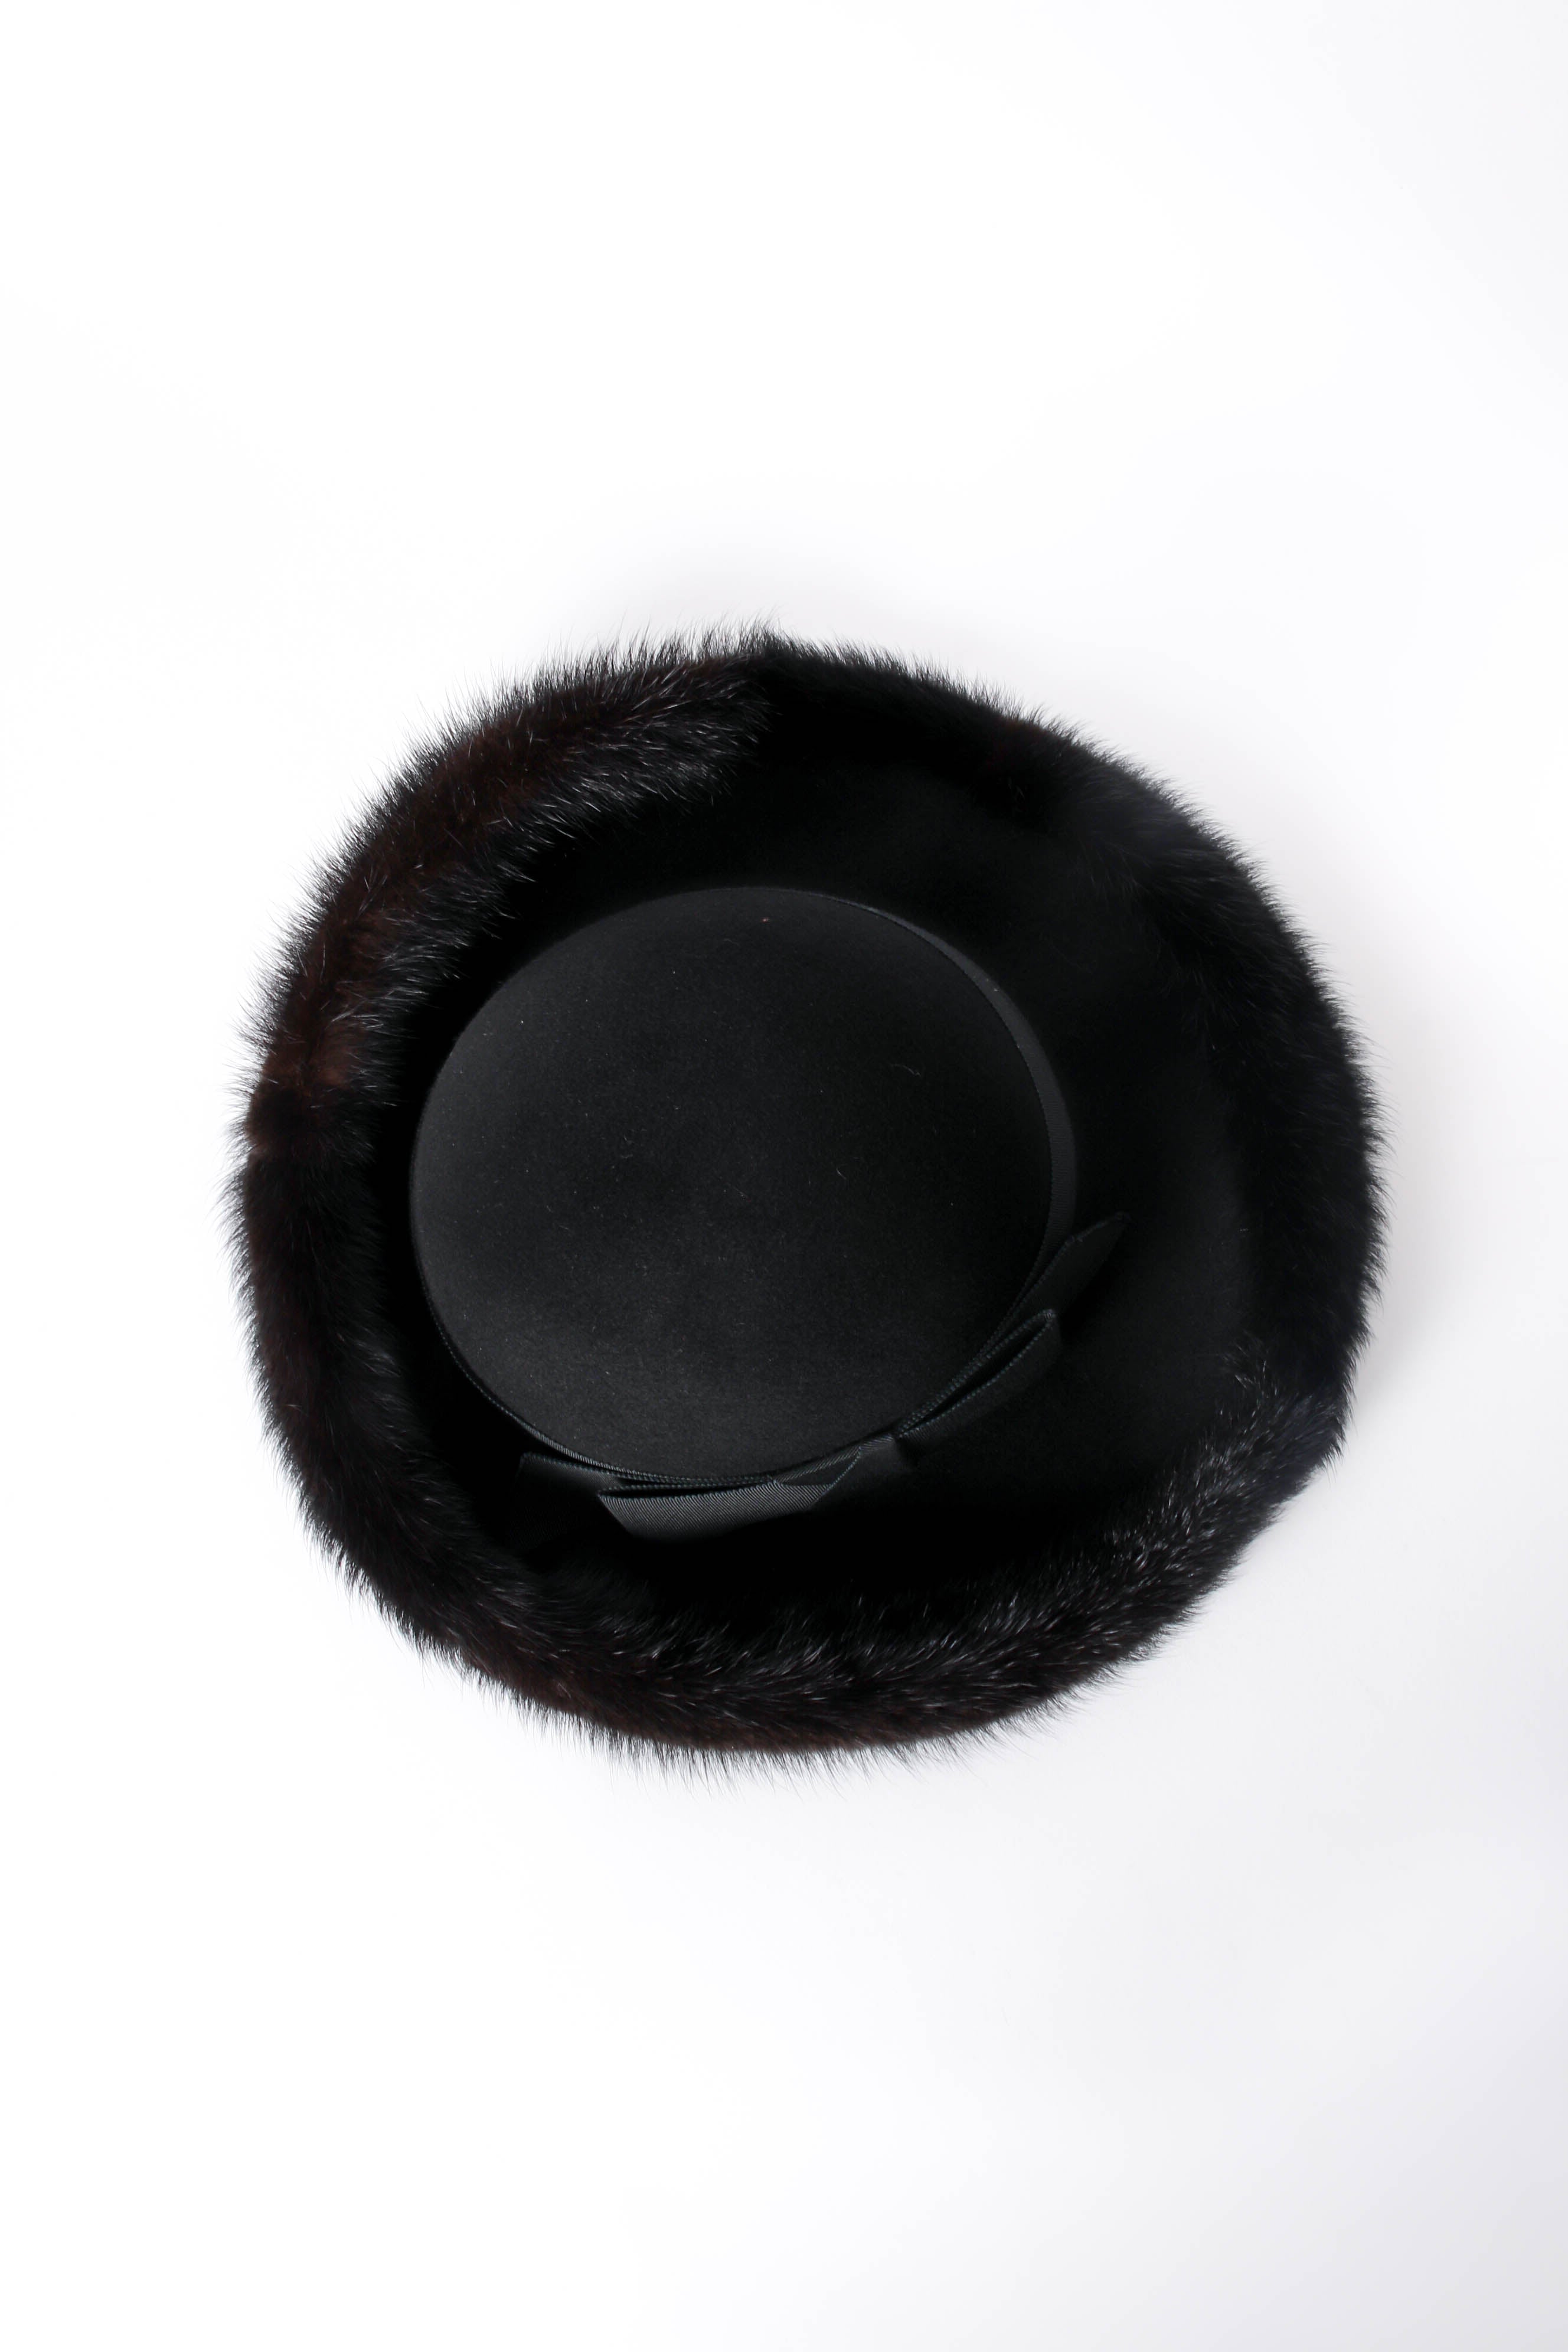 Vintage Mr. John Excello Fur-Trimmed Petite Halo Hat top at Recess Los Angeles